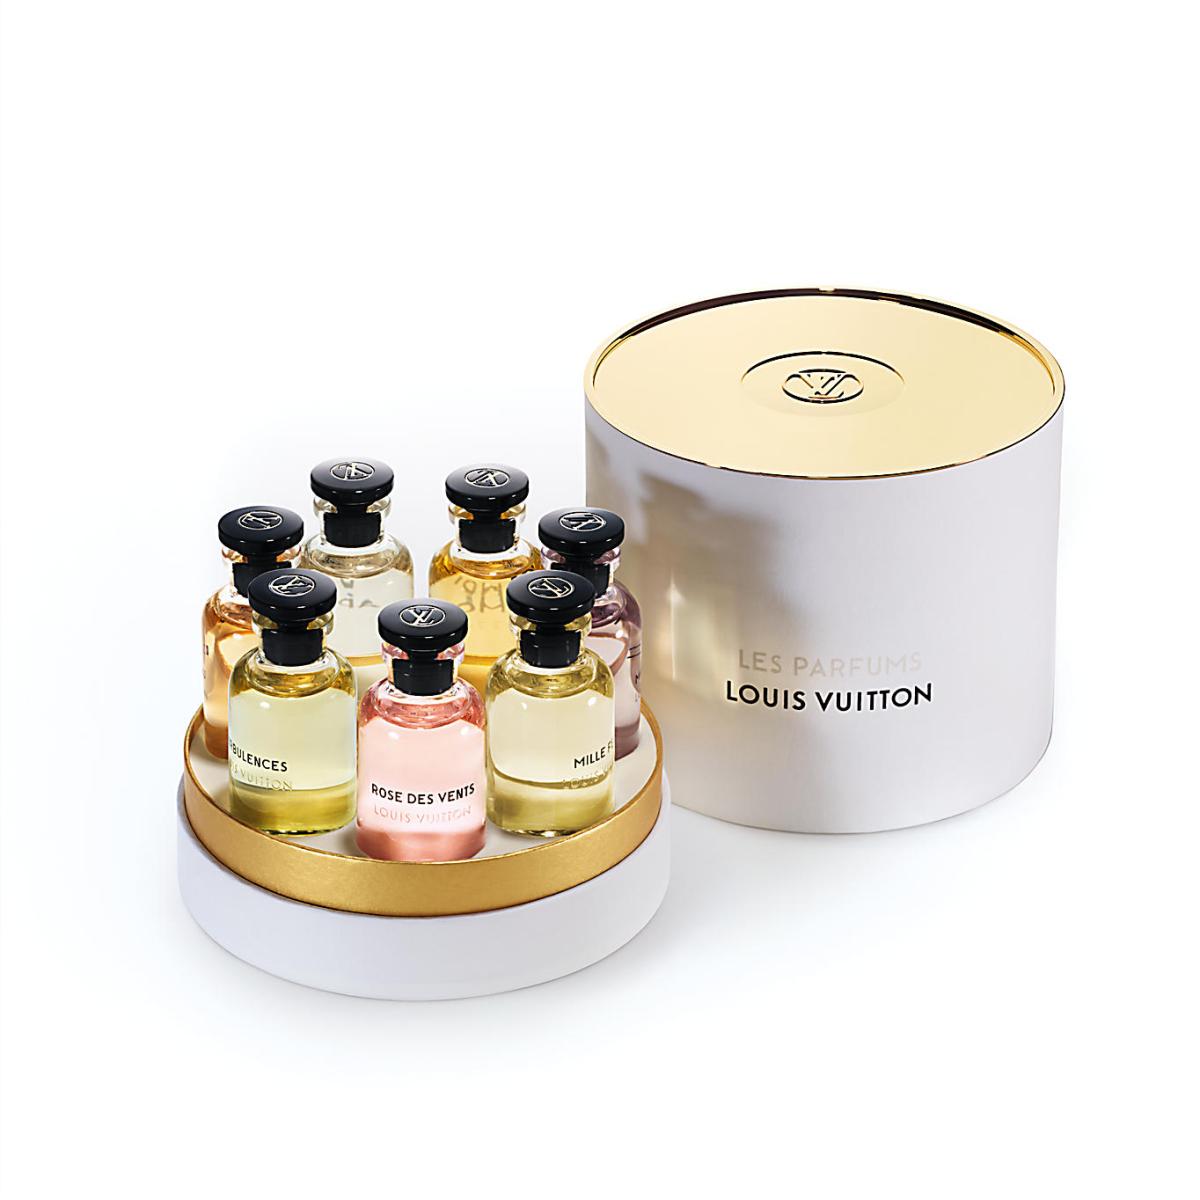 Louis Vuitton Miniatures Set Ombre Nomade 4 x 7.5 ml Gift Set